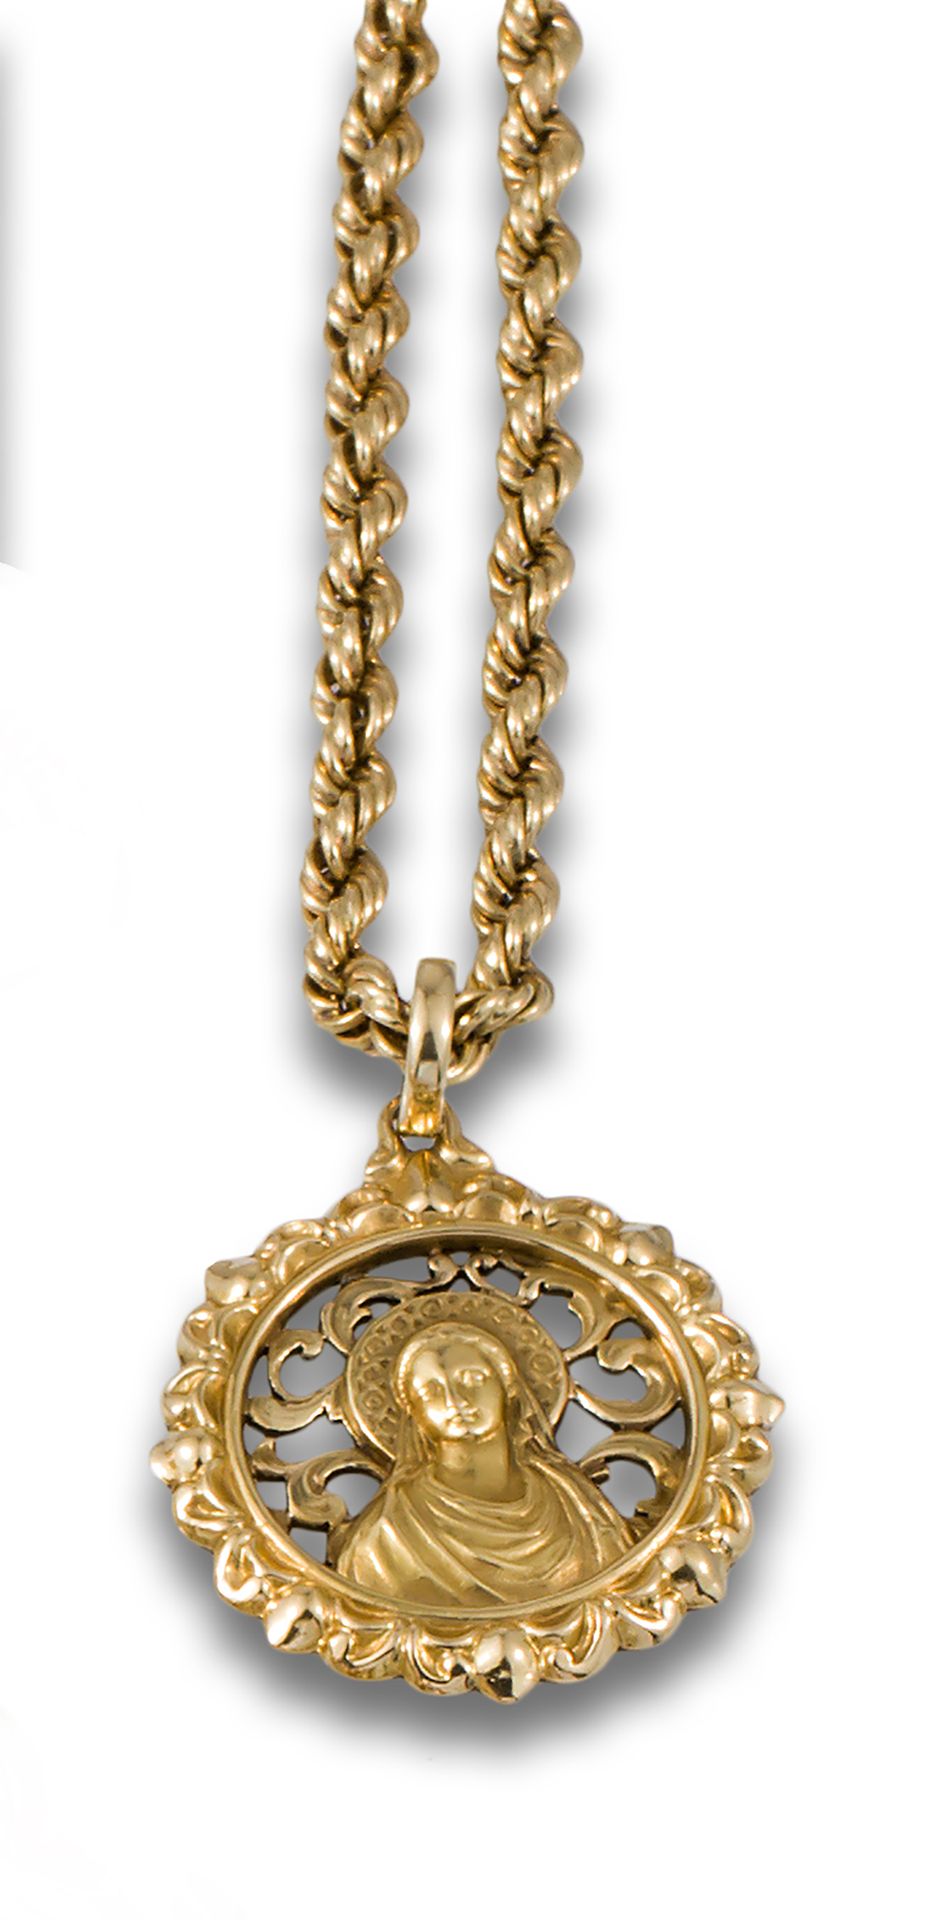 VIRGIN YELLOW GOLD CORD AND MEDAL 镂空的18K黄金圣母奖章。附带一条18K黄金绳索链。 重量：19,80克。